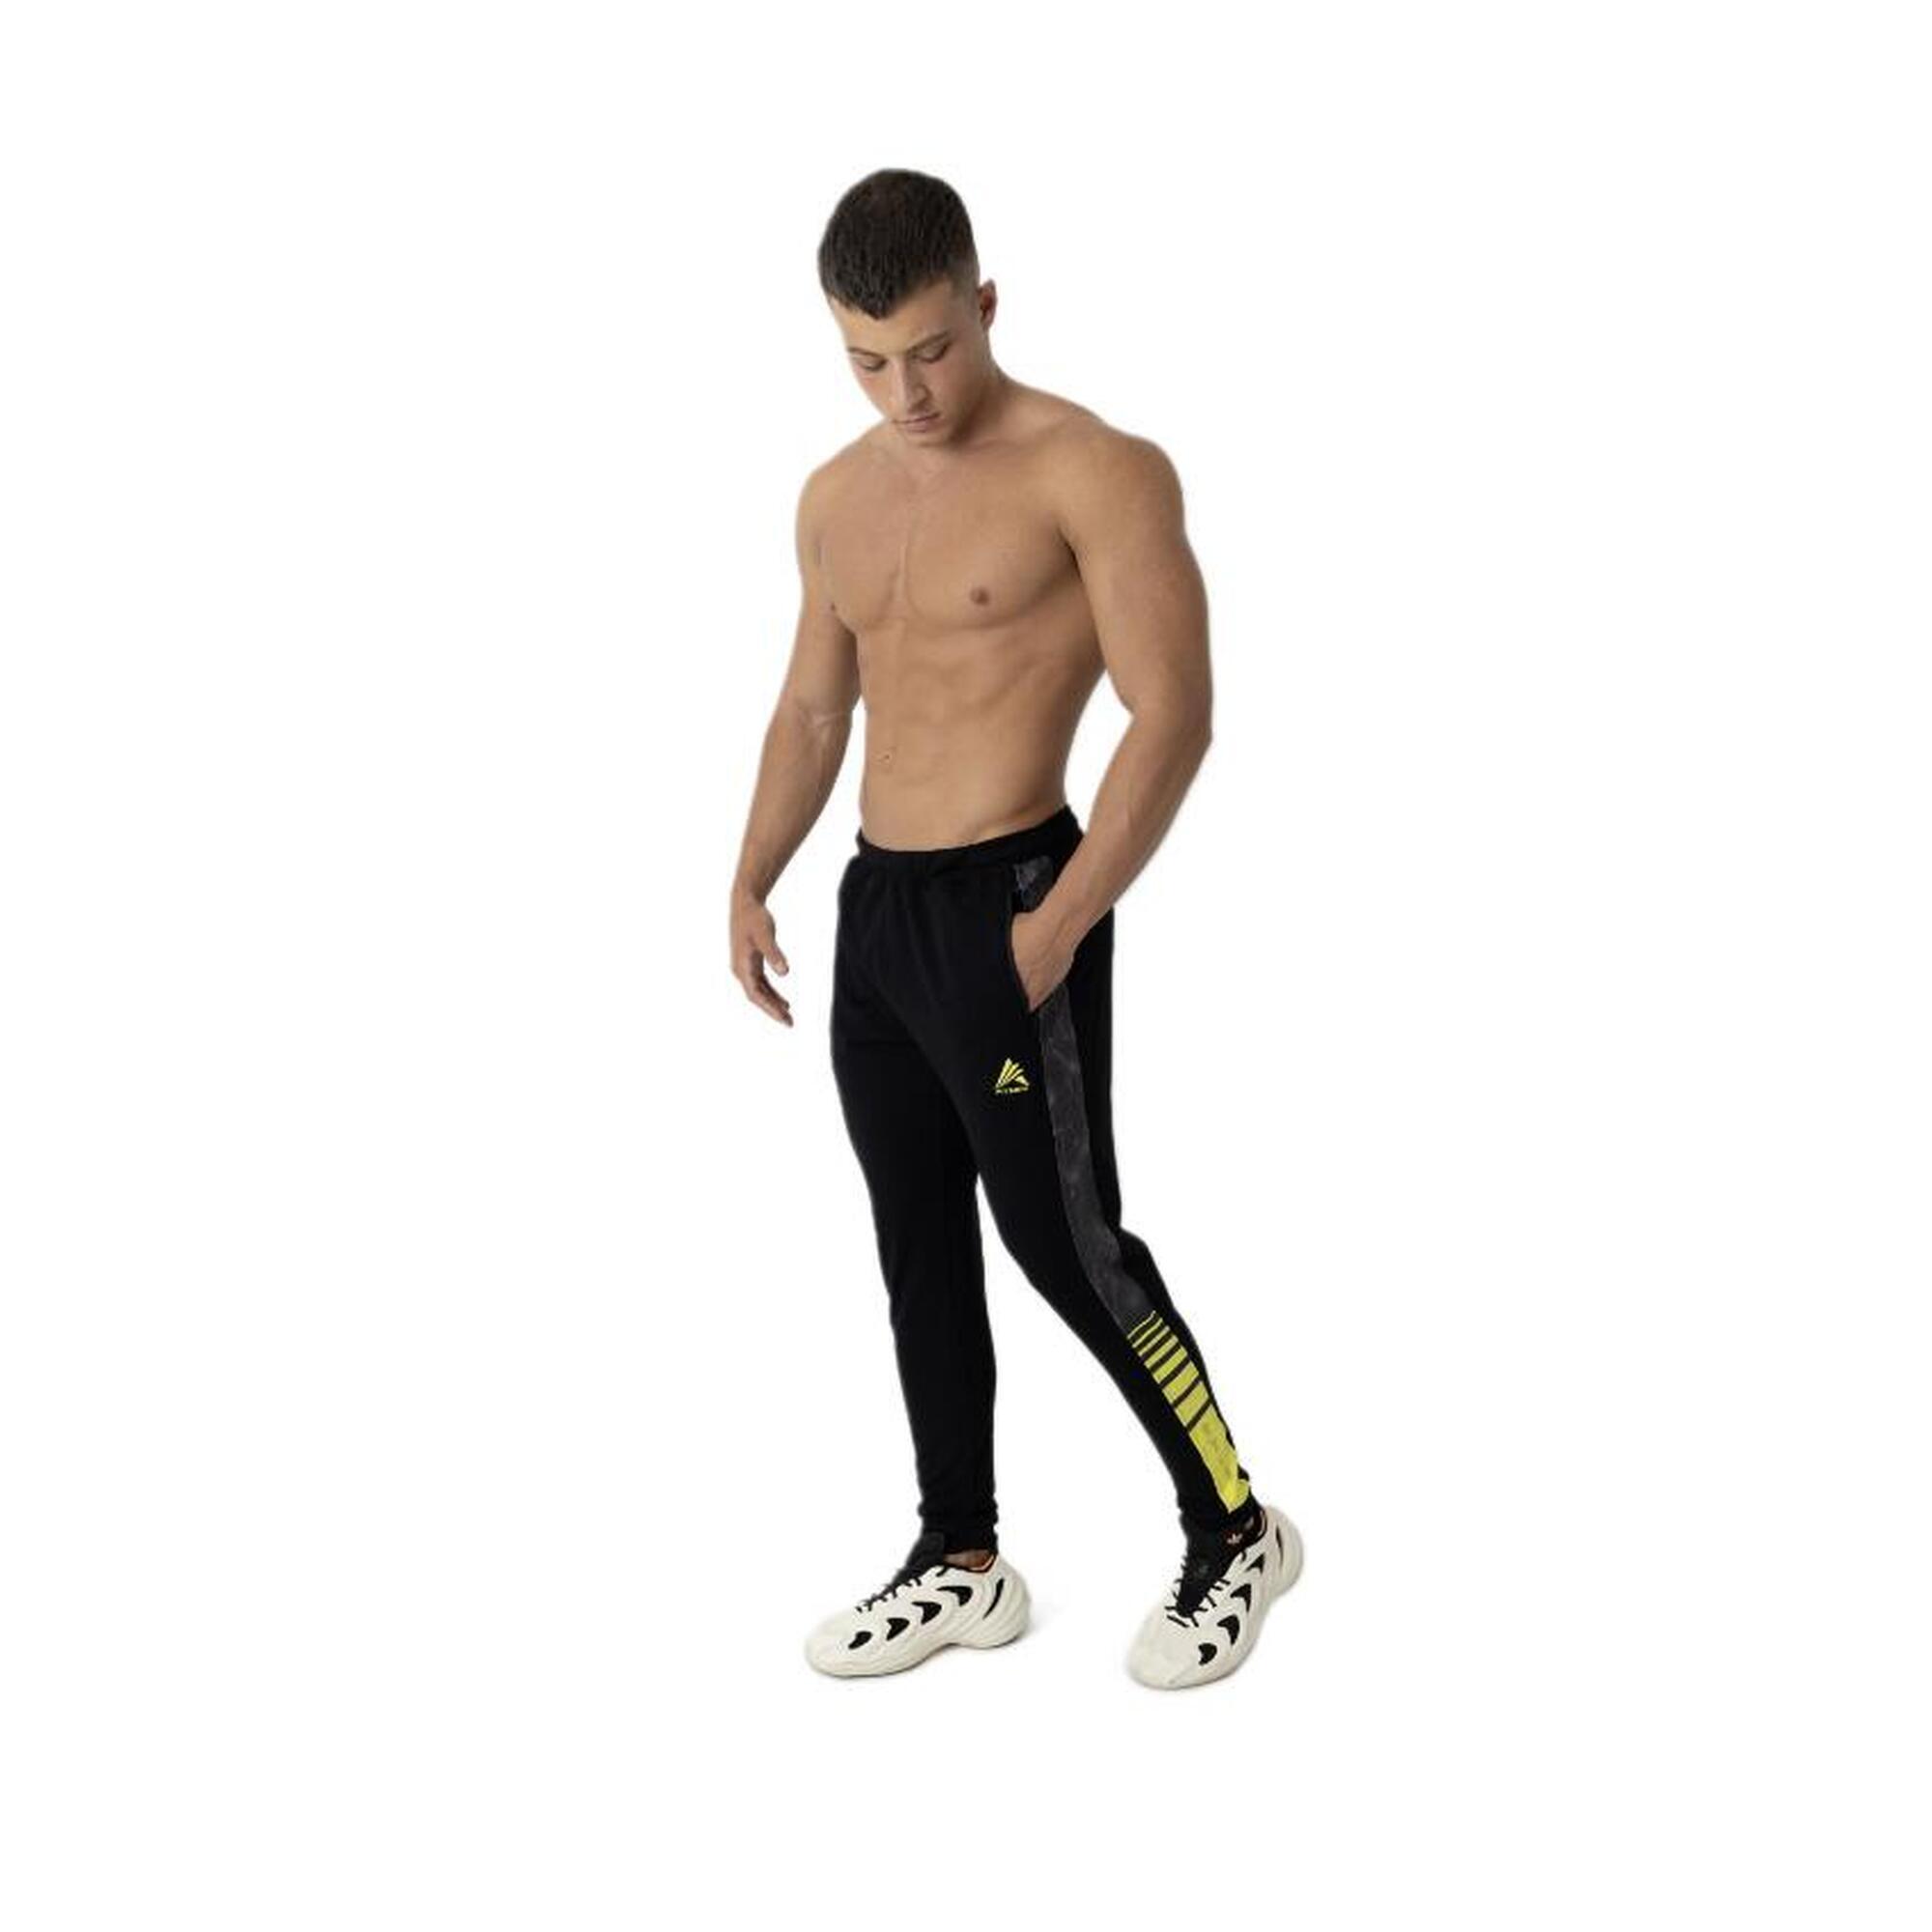 Pantalon bumbac masculin- International Fitness and Body Building Federation